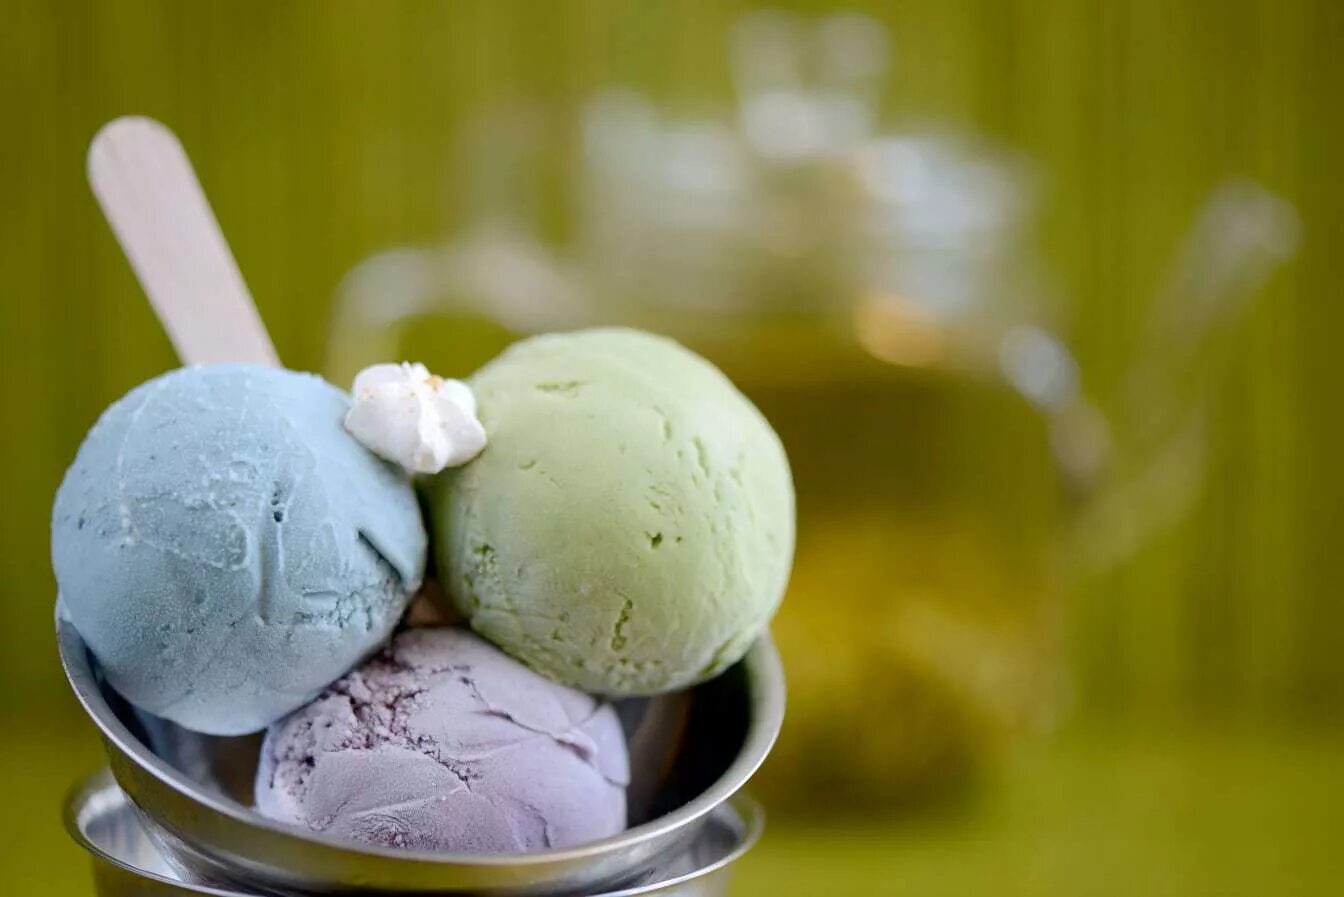 Мороженое. Чайное мороженое. Голубое мороженое. Мороженое фото. Чай мороженое купить